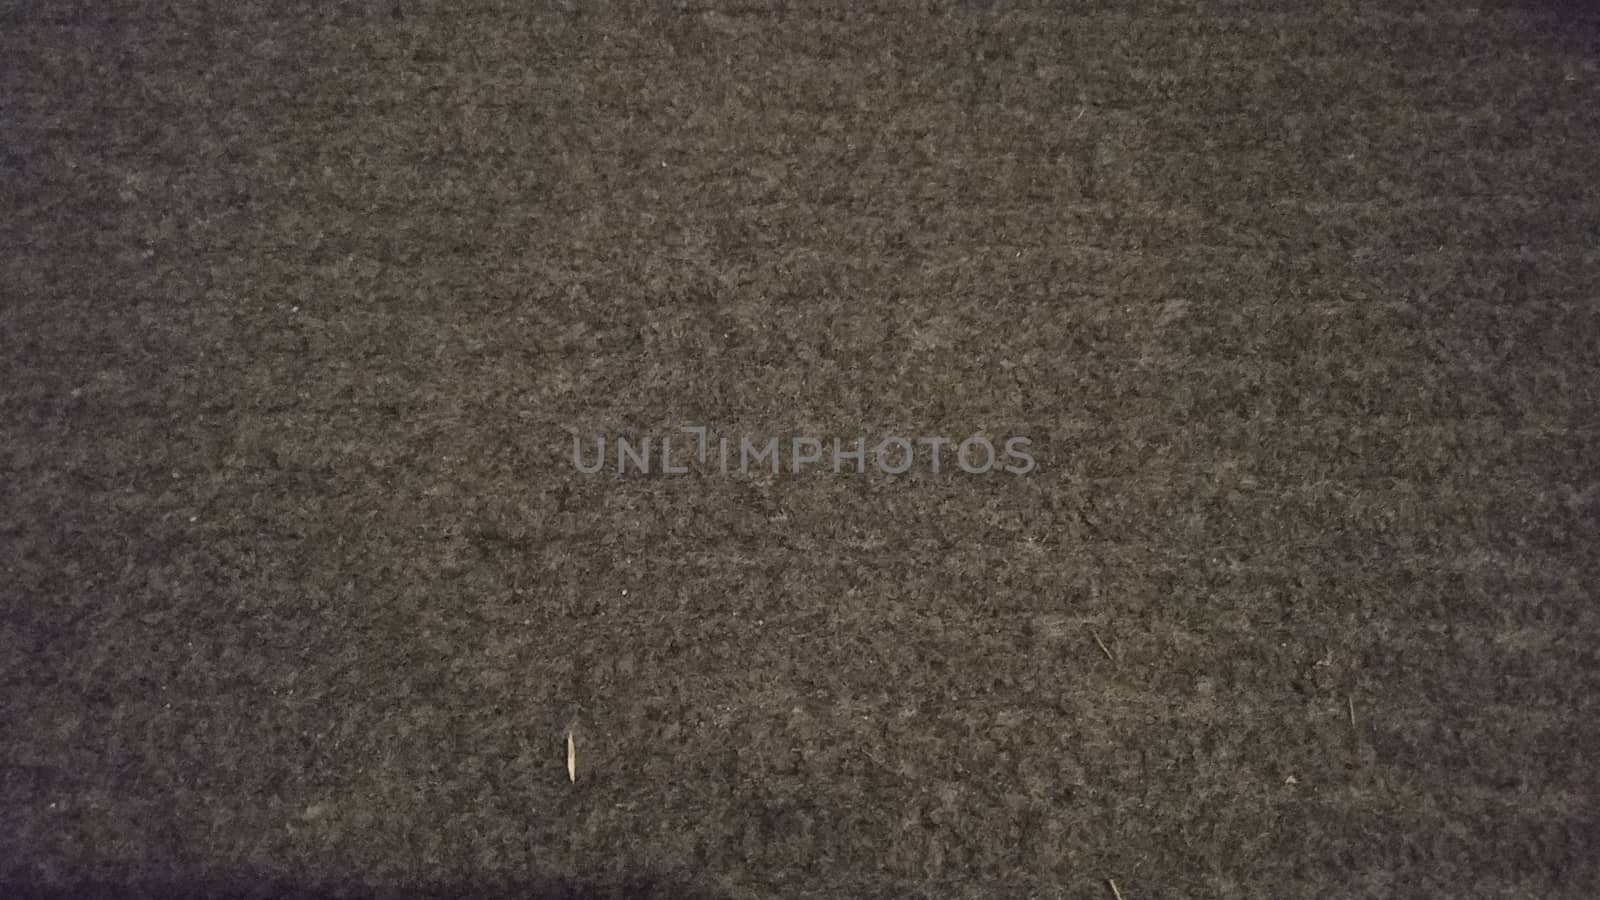 Carpet dark gray close-up, nap. Background pattern